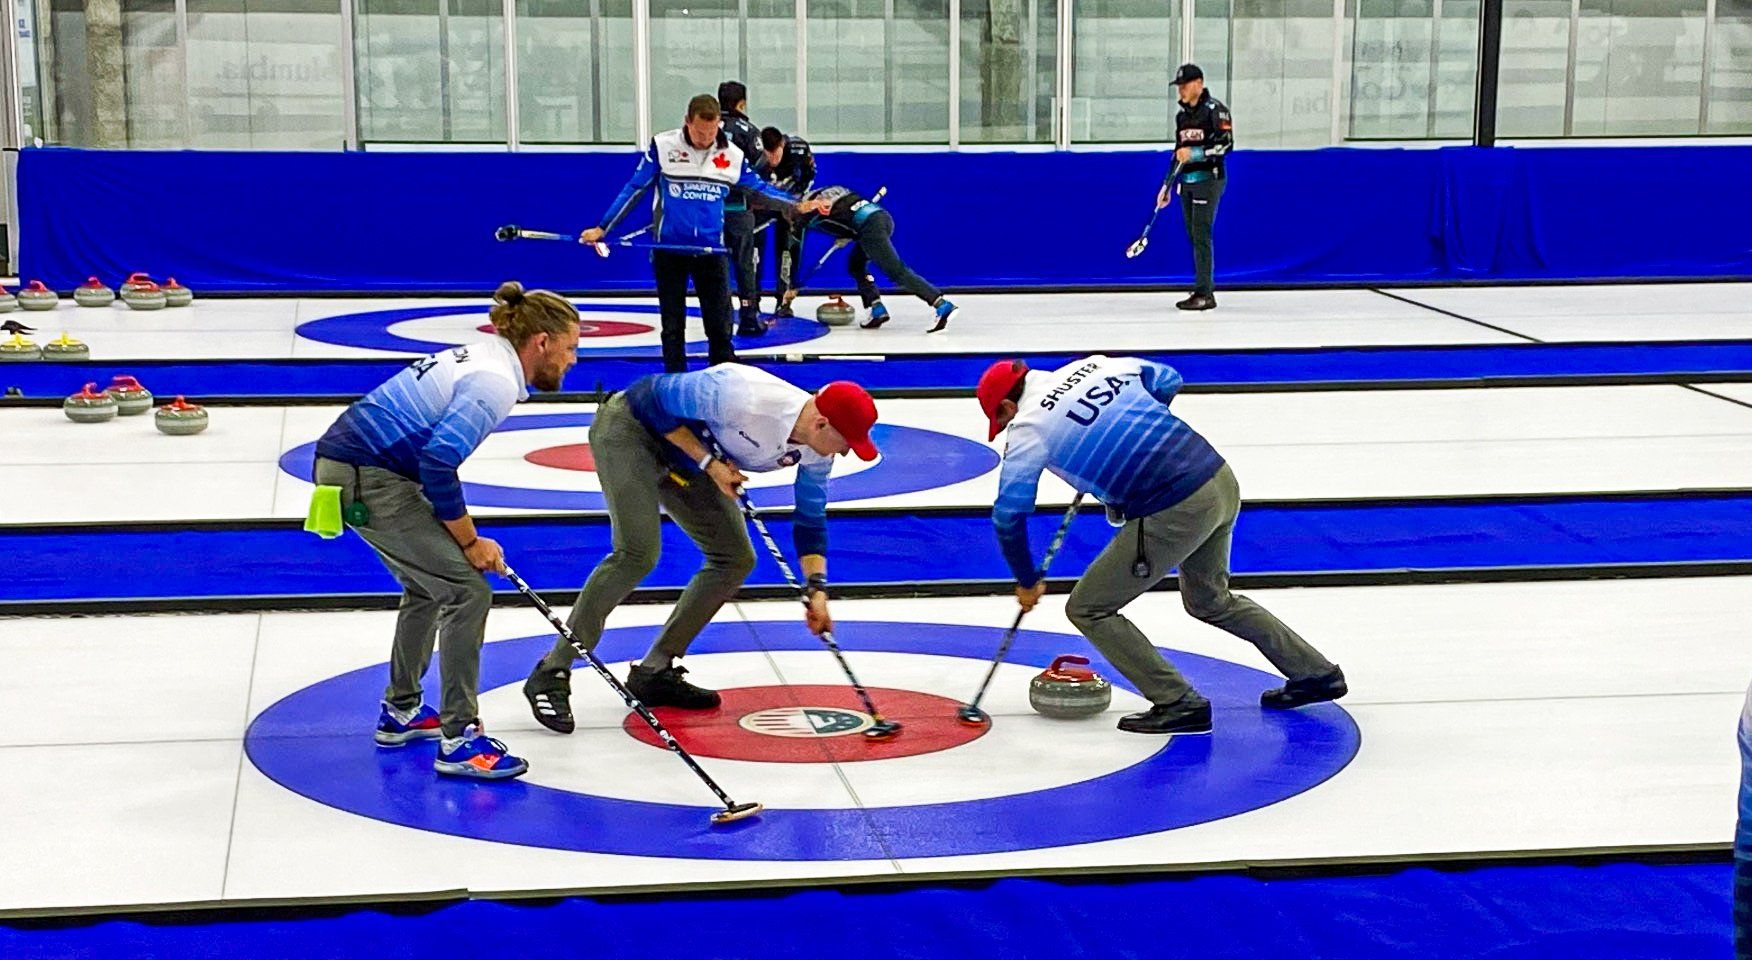 Curling team on ice.